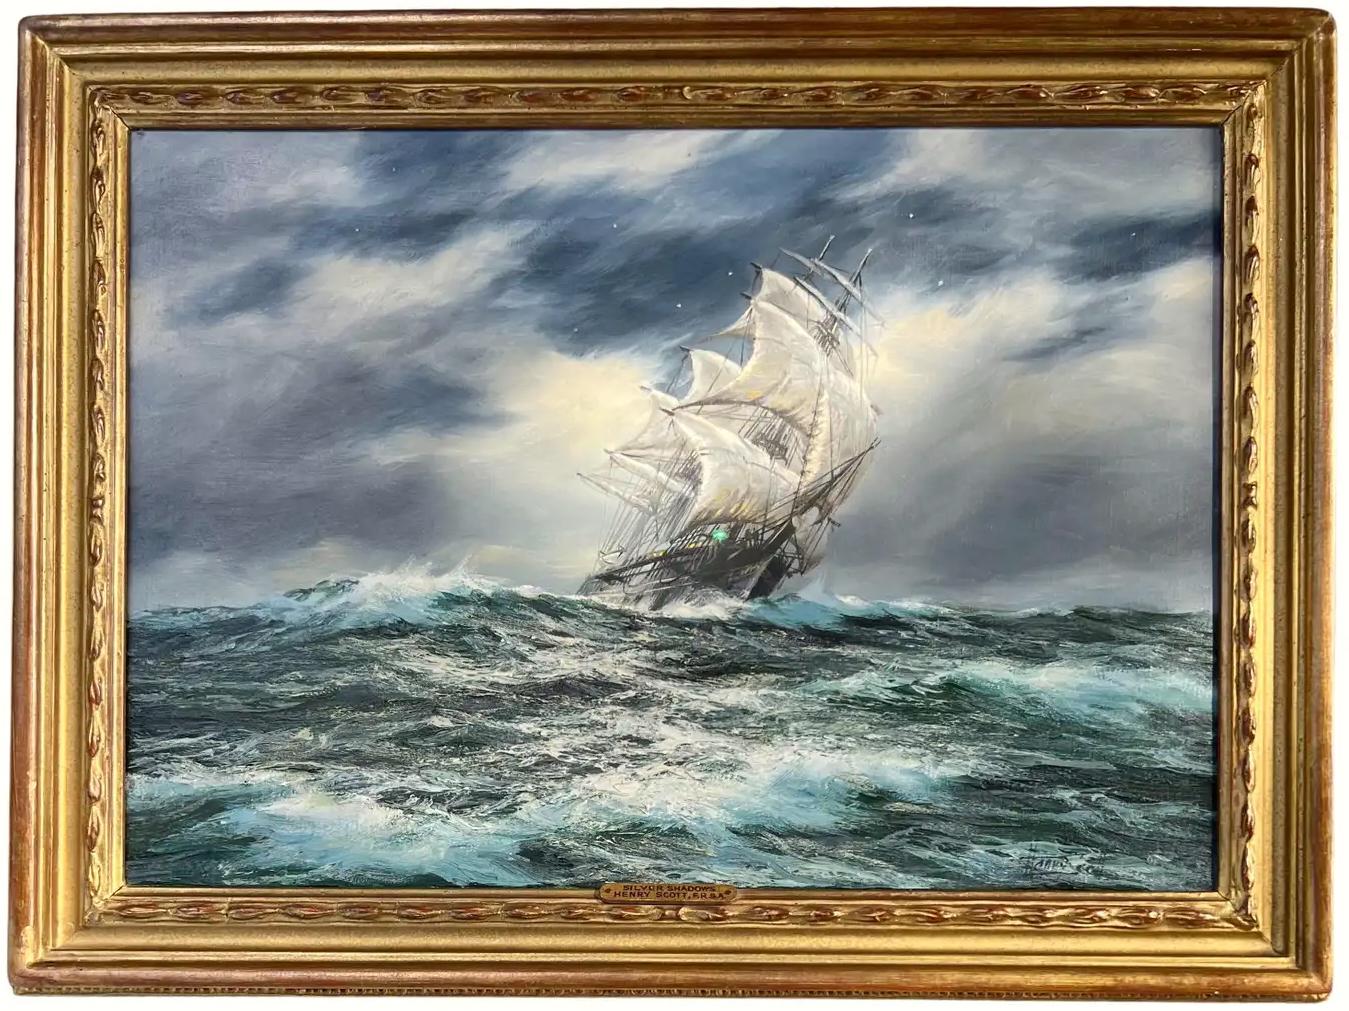 Henry Scott Landscape Painting - The Clipper Ship Lightning